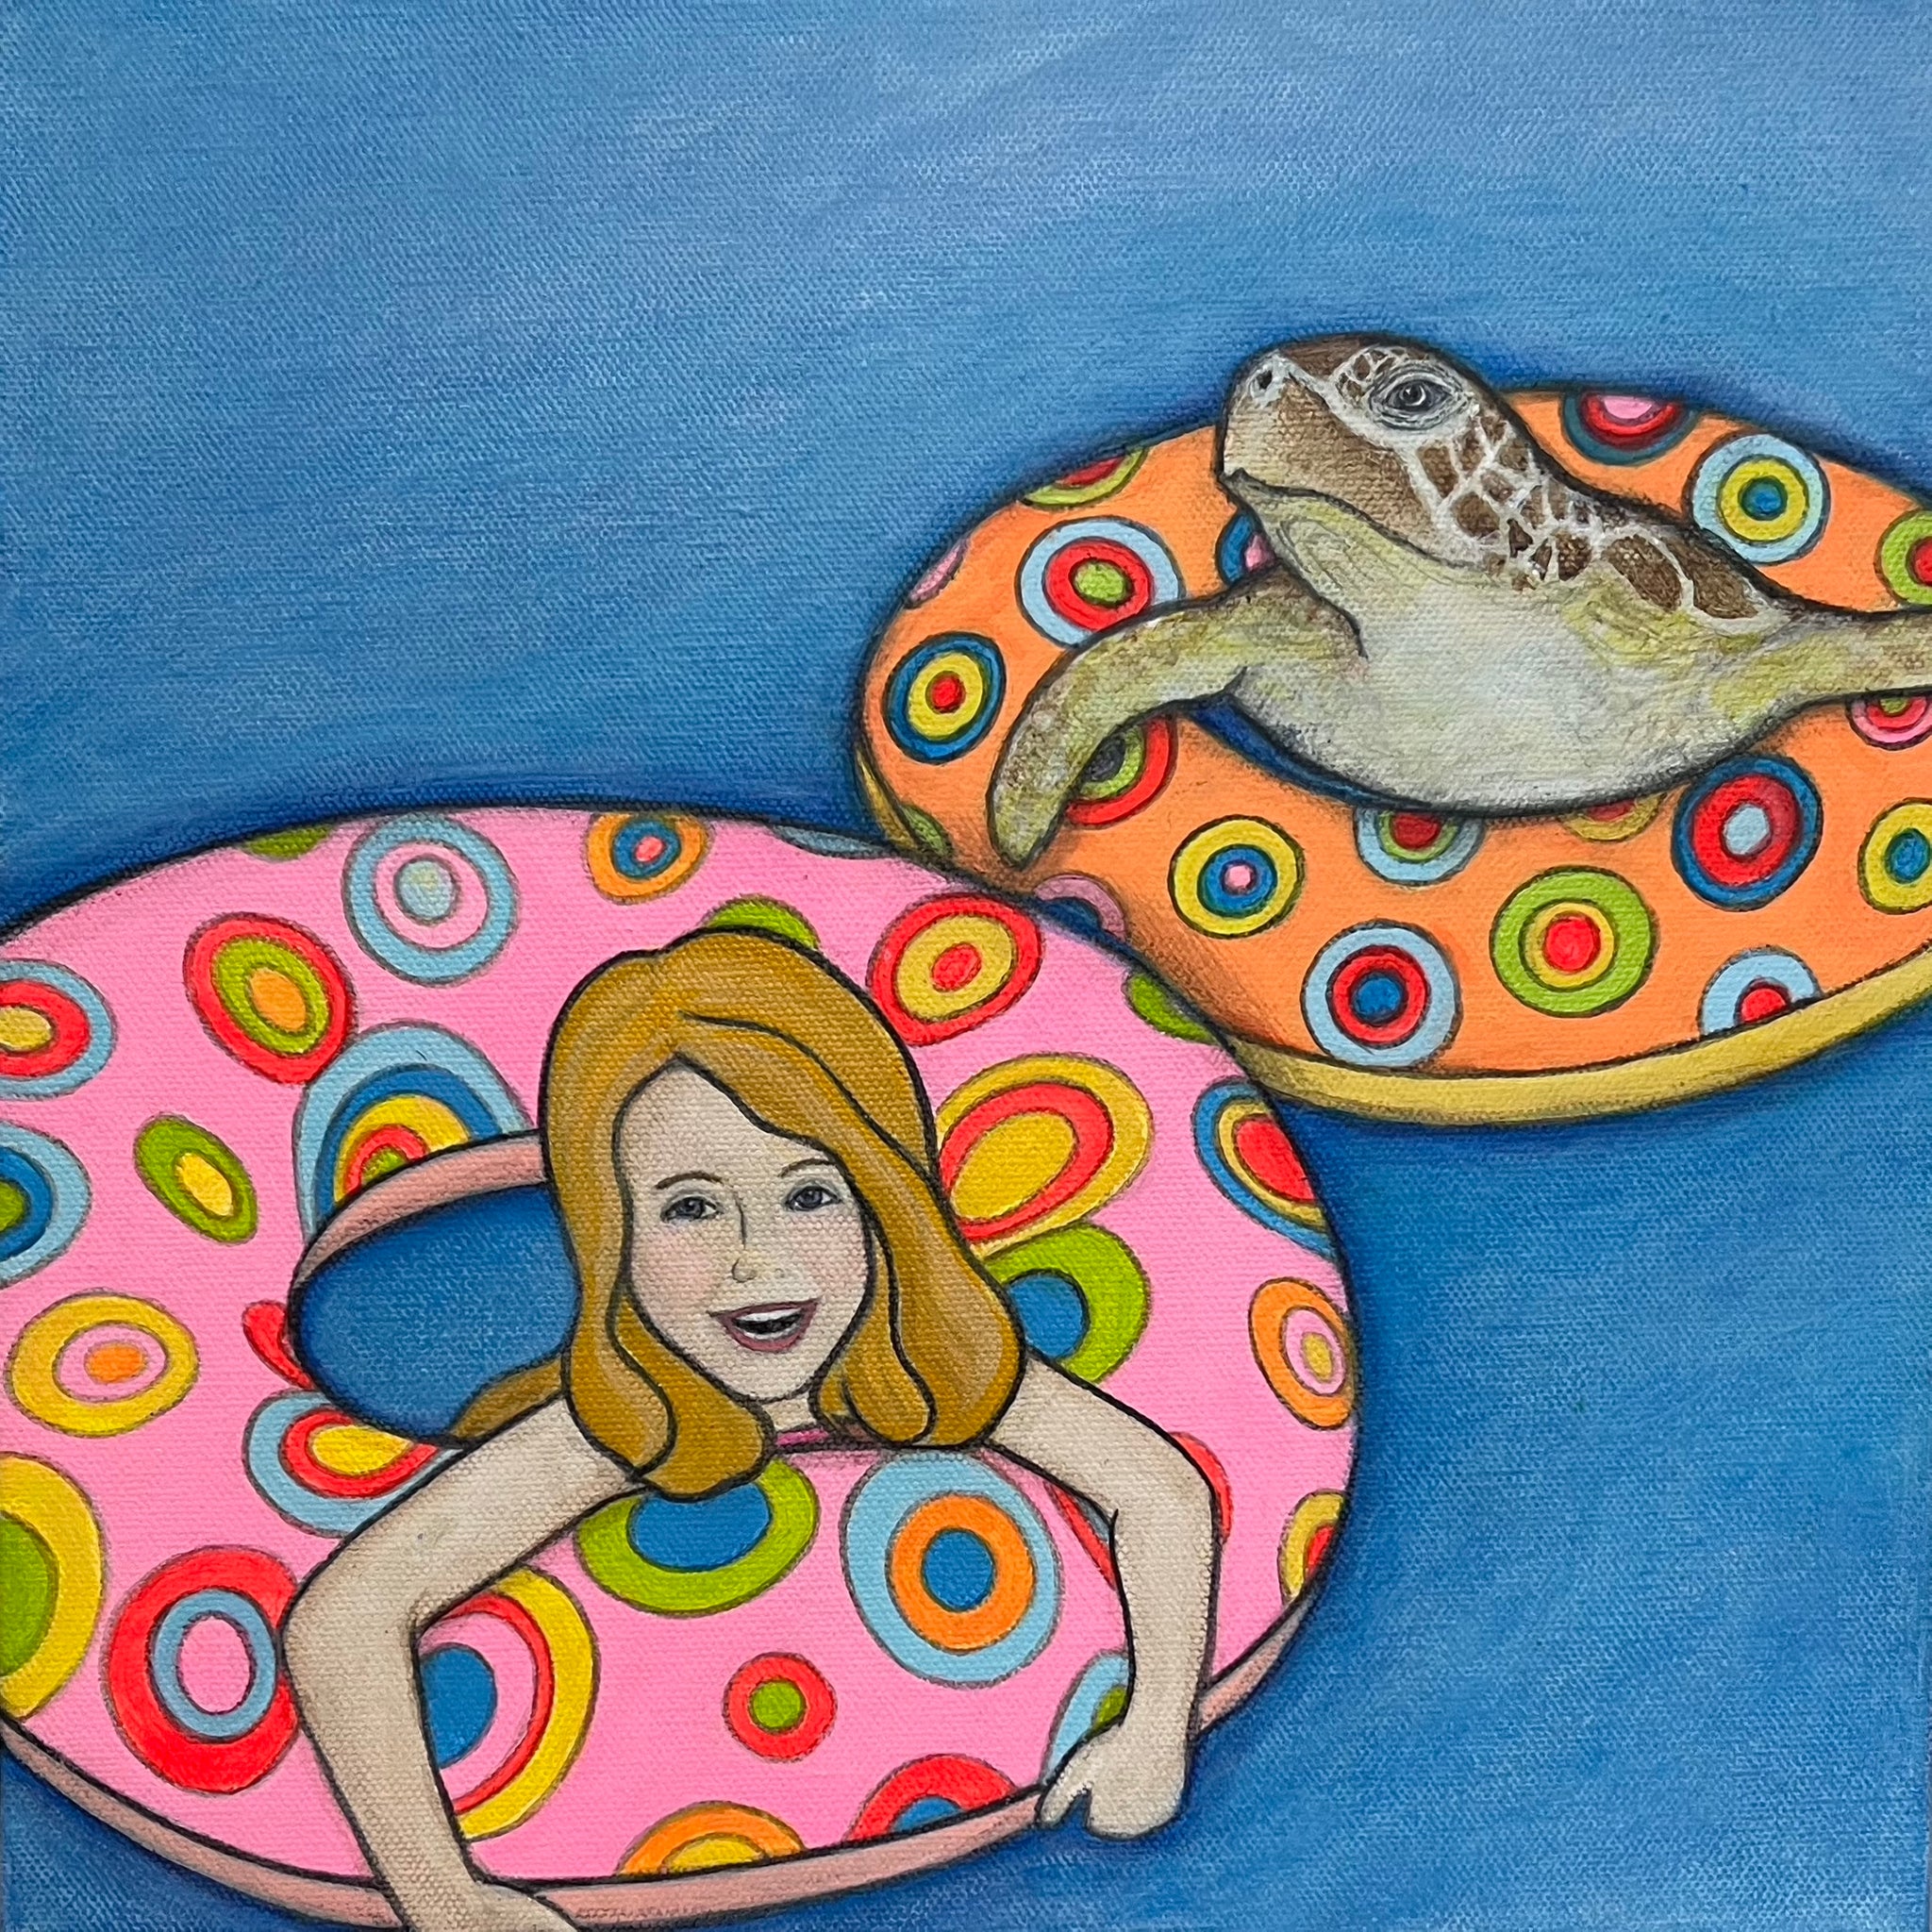 Floating Fun by Diane V. Radel